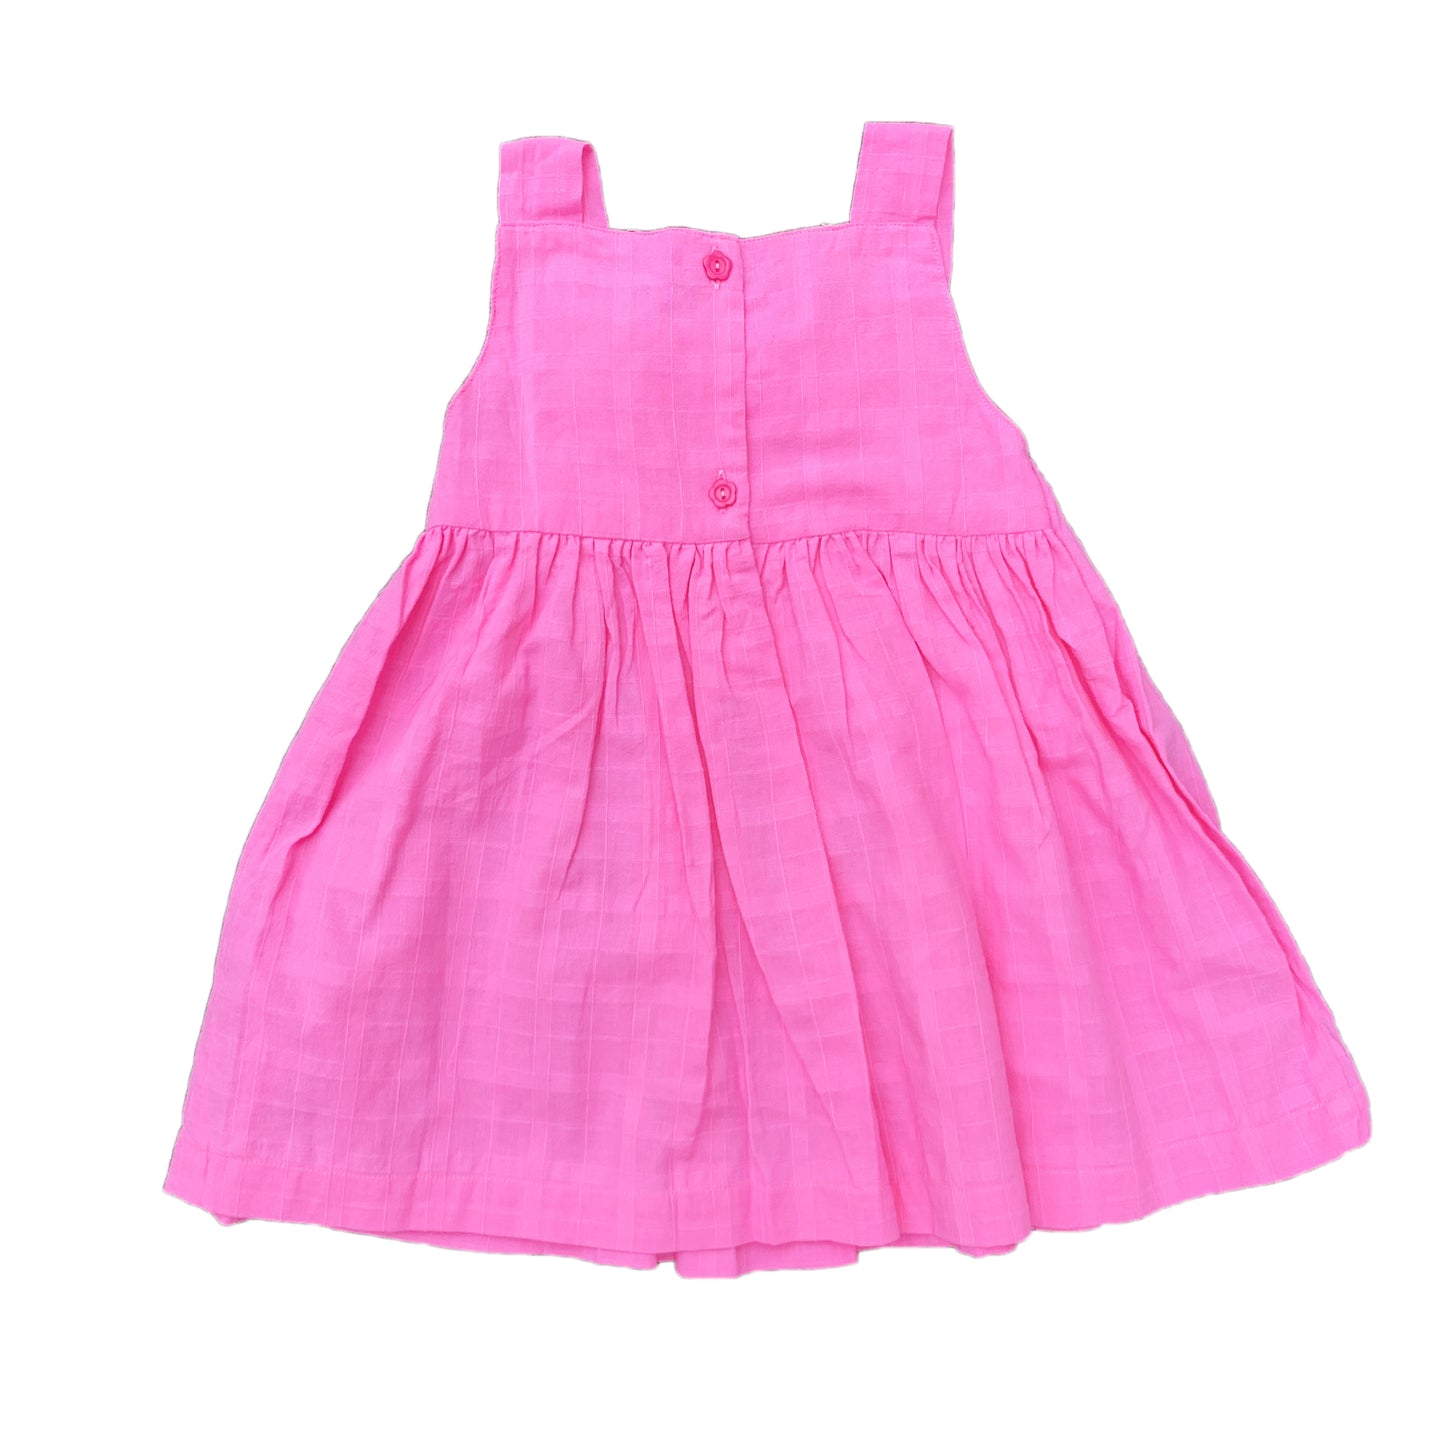 Pink Strap Smocked Dress